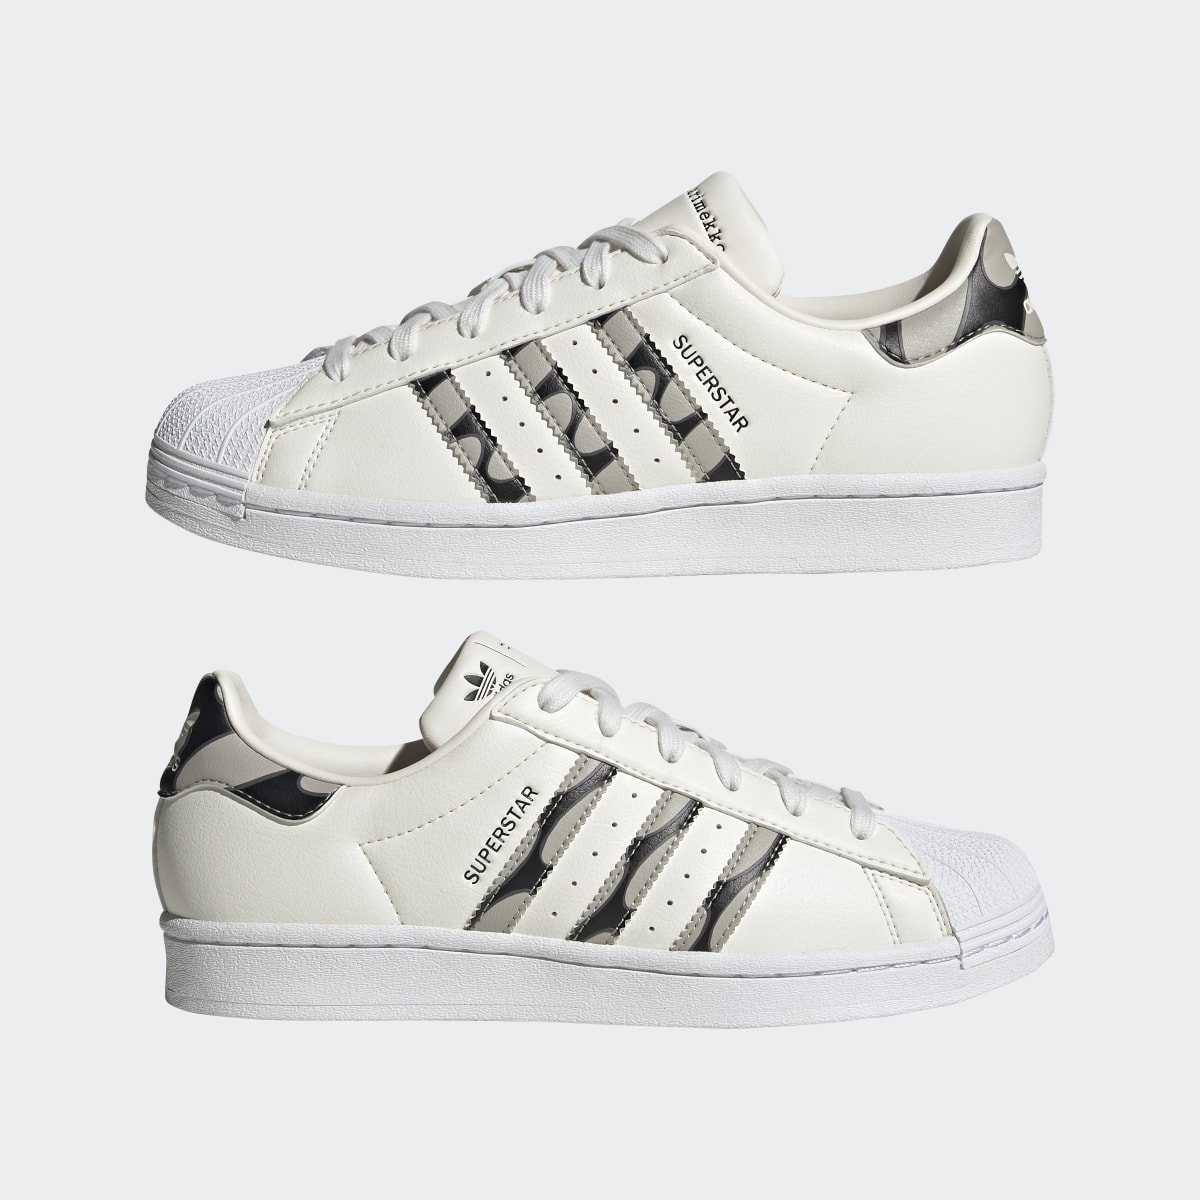 Adidas x Marimekko Superstar Shoes. 9